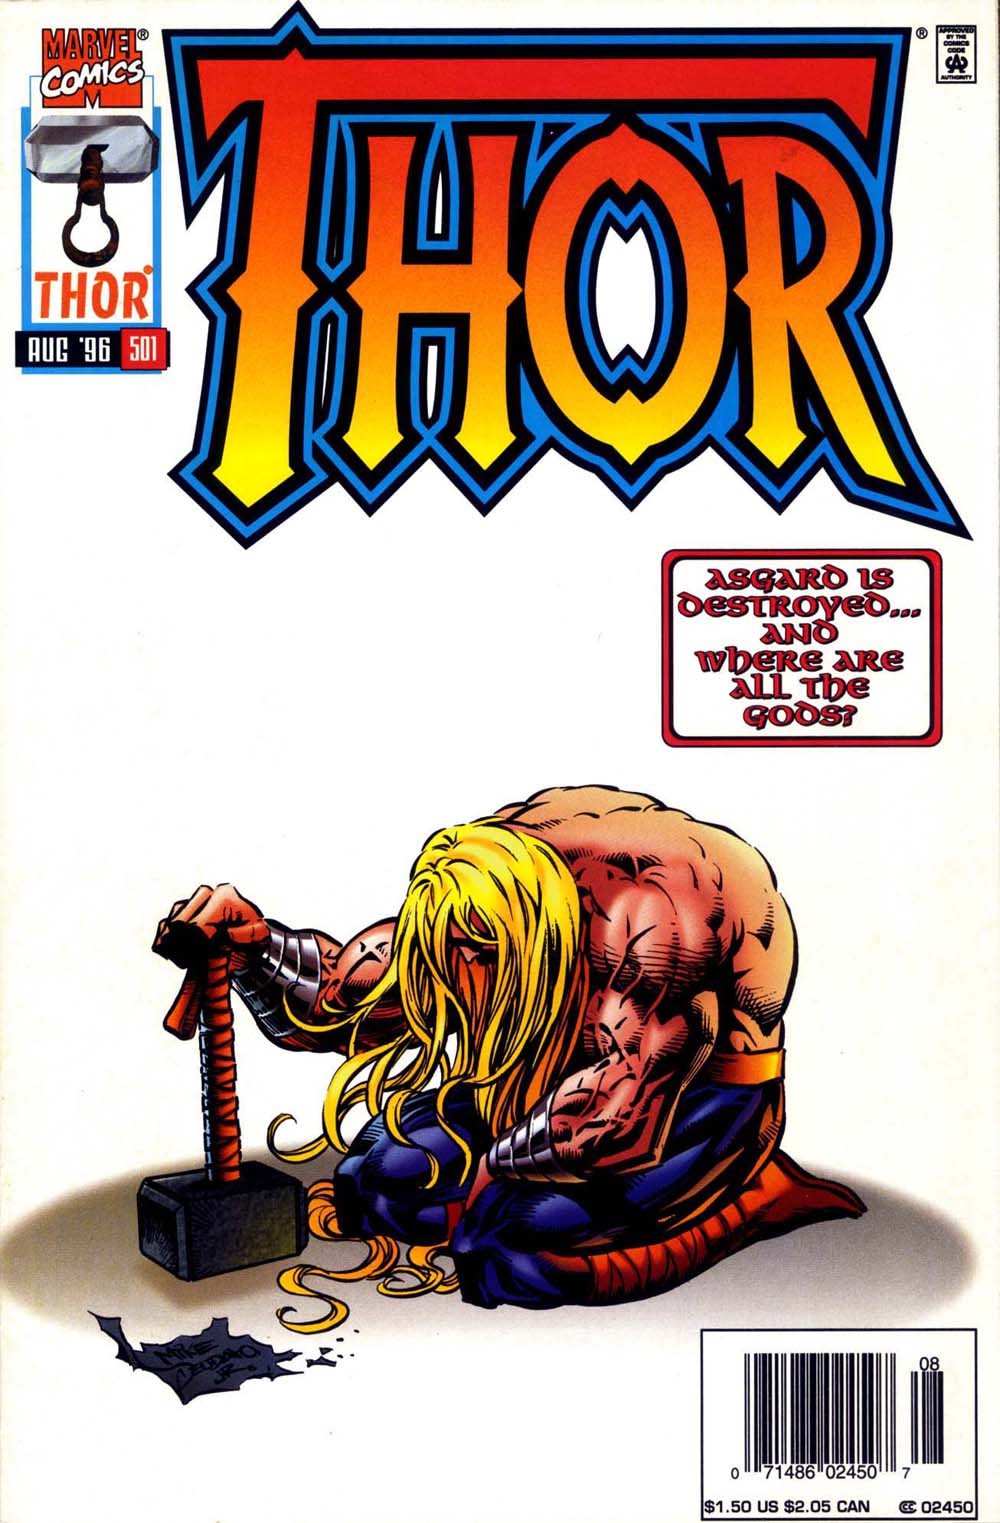 Thor Vol. 1 #501